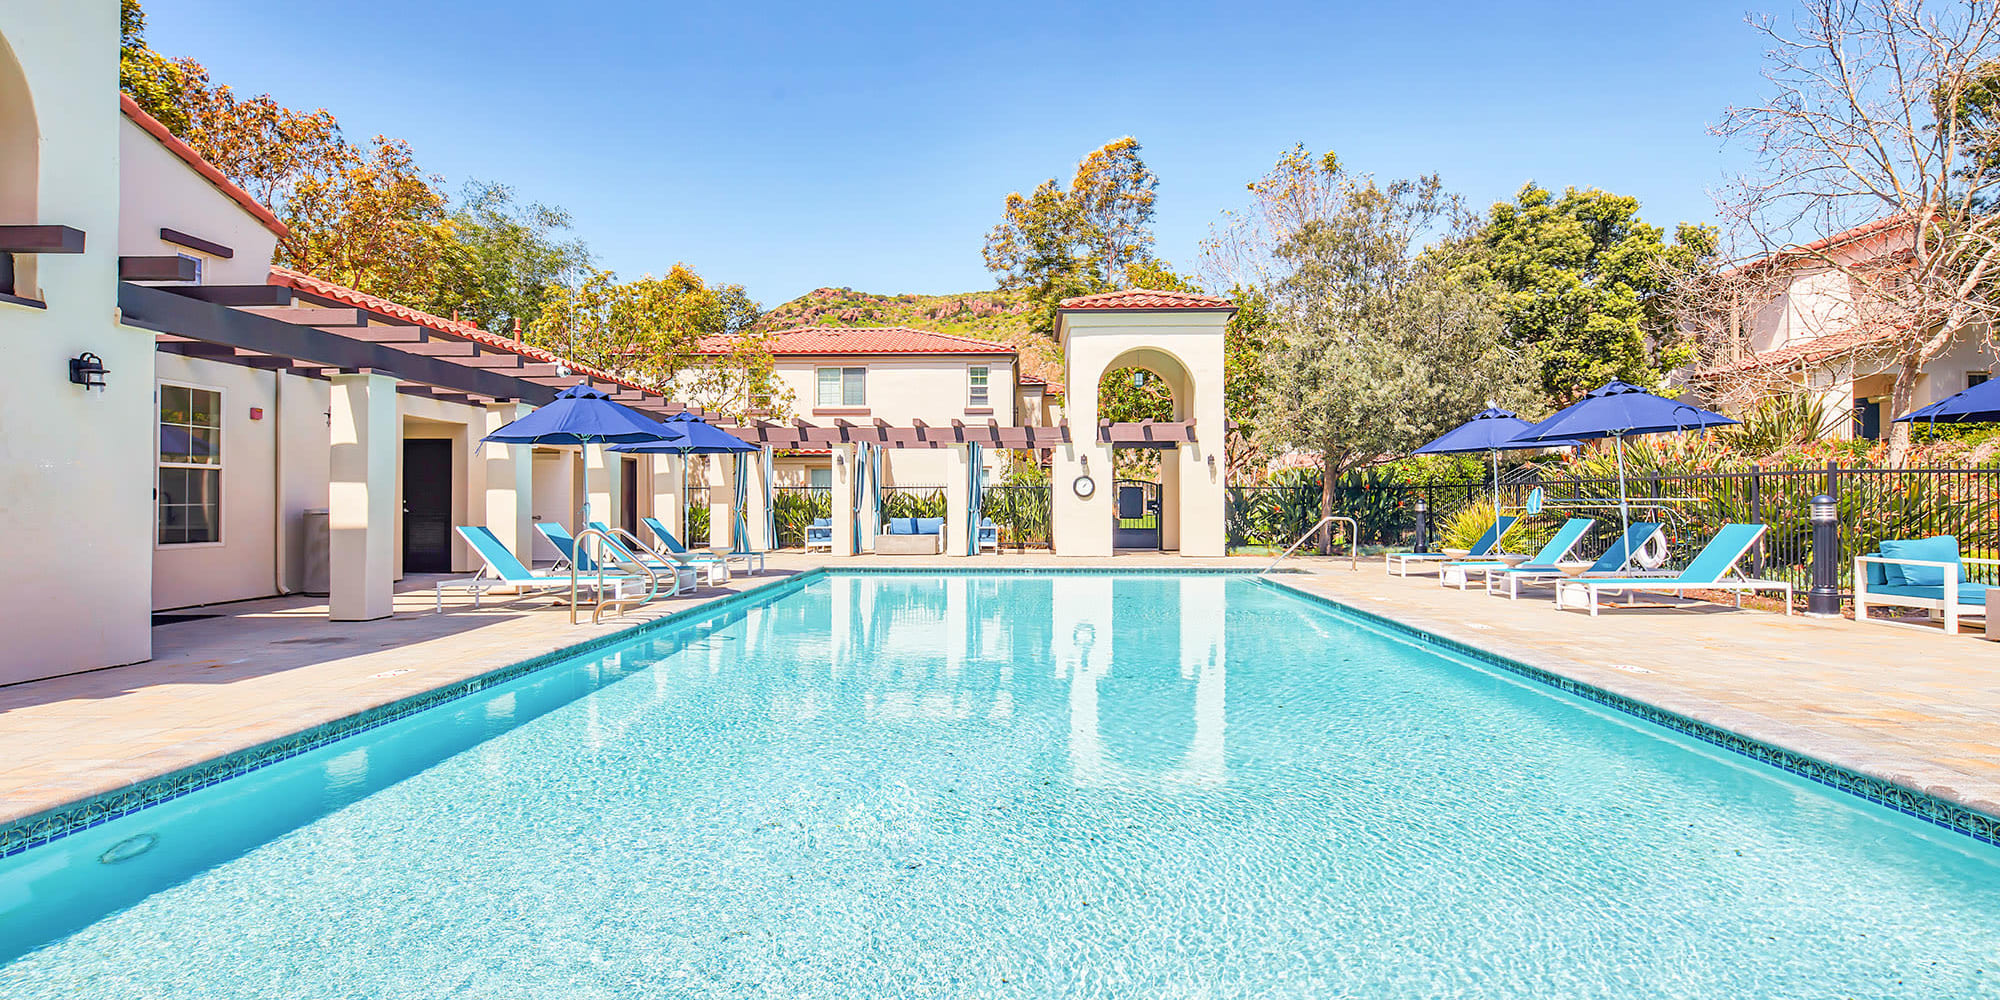 Resort-style swimming pool at Mission Hills in Camarillo, California